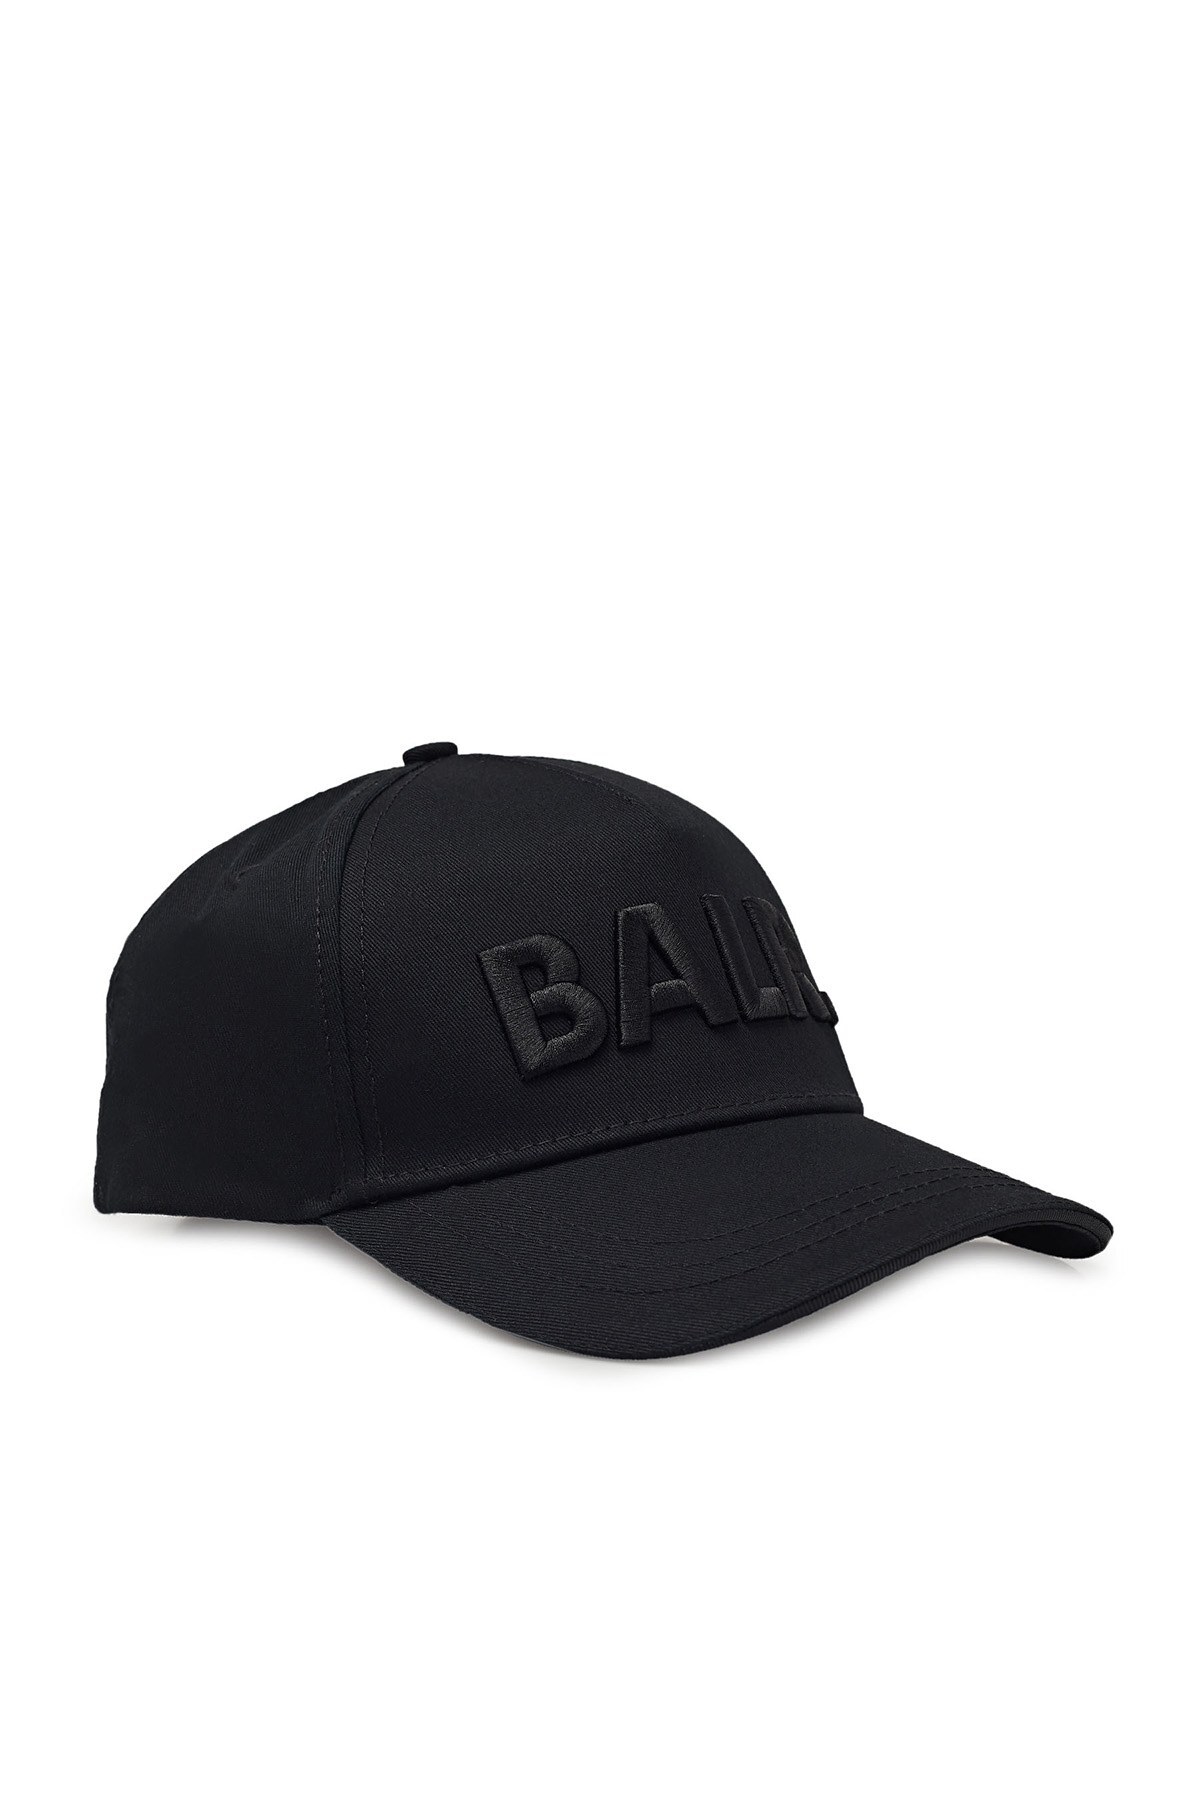 Balr Pamuklu Marka Logolu Erkek Şapka B10015 BB SİYAH